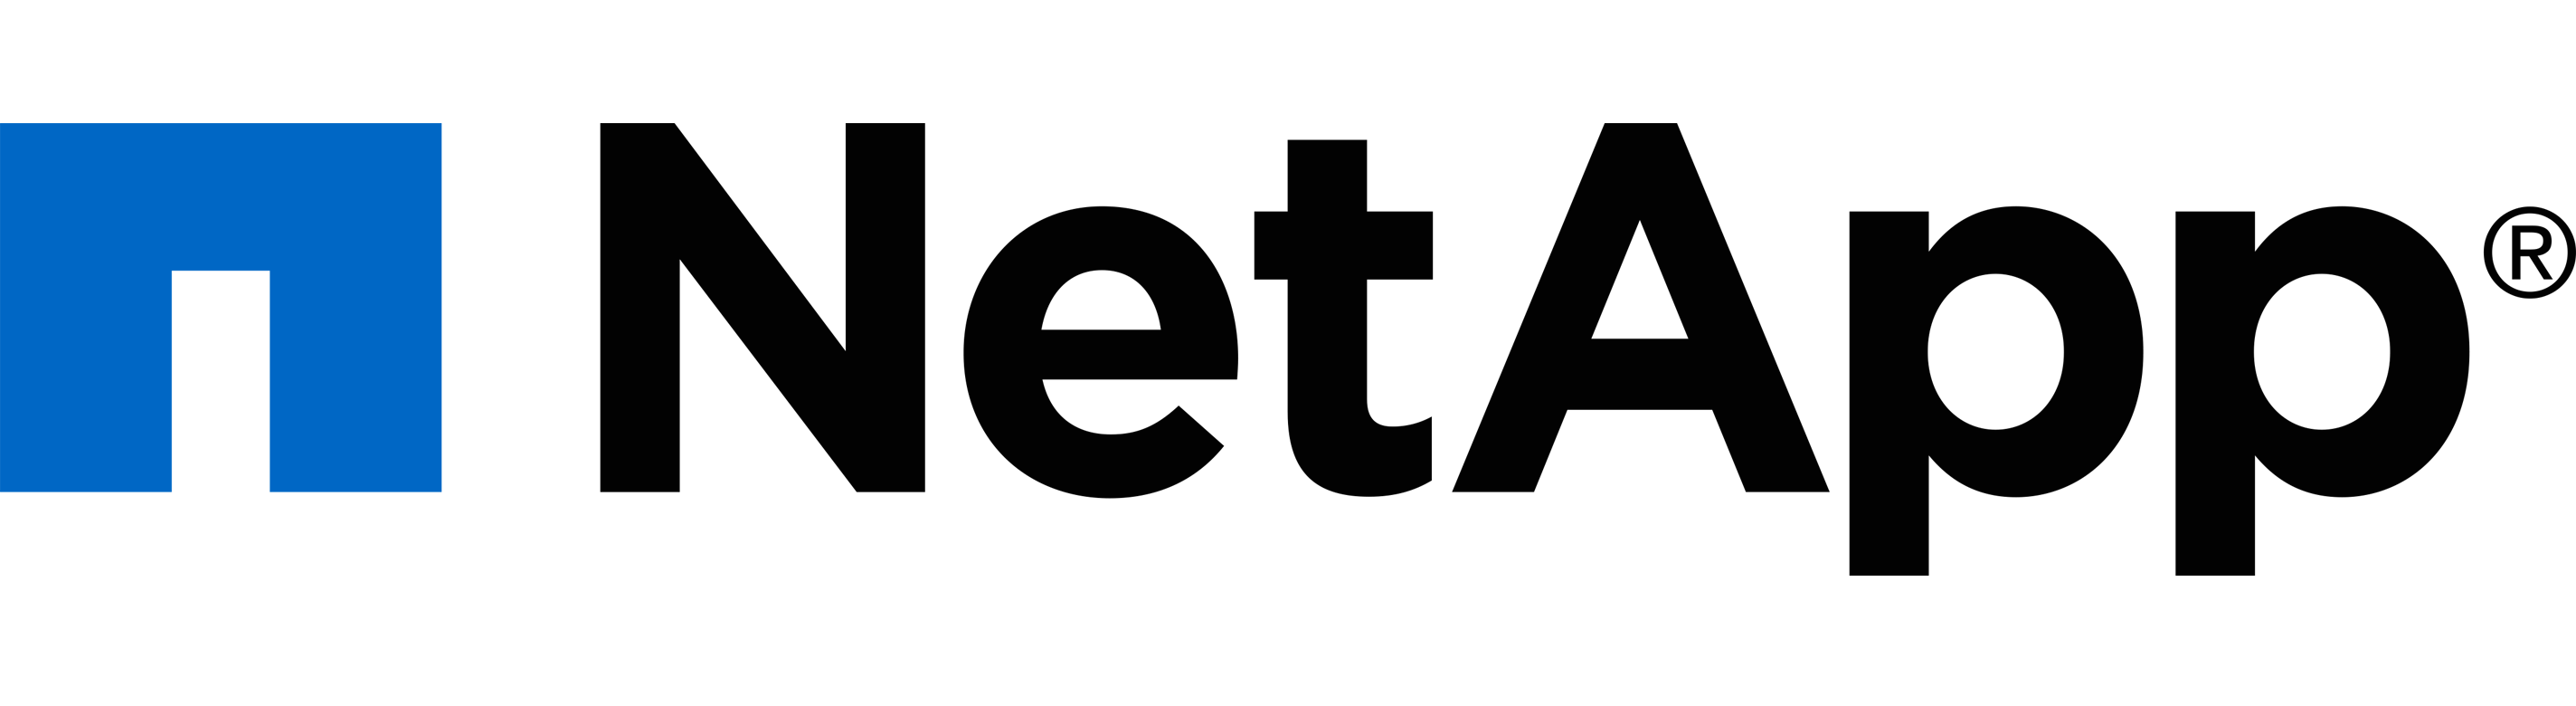 Data Storage Solutions - Partner Logo 3